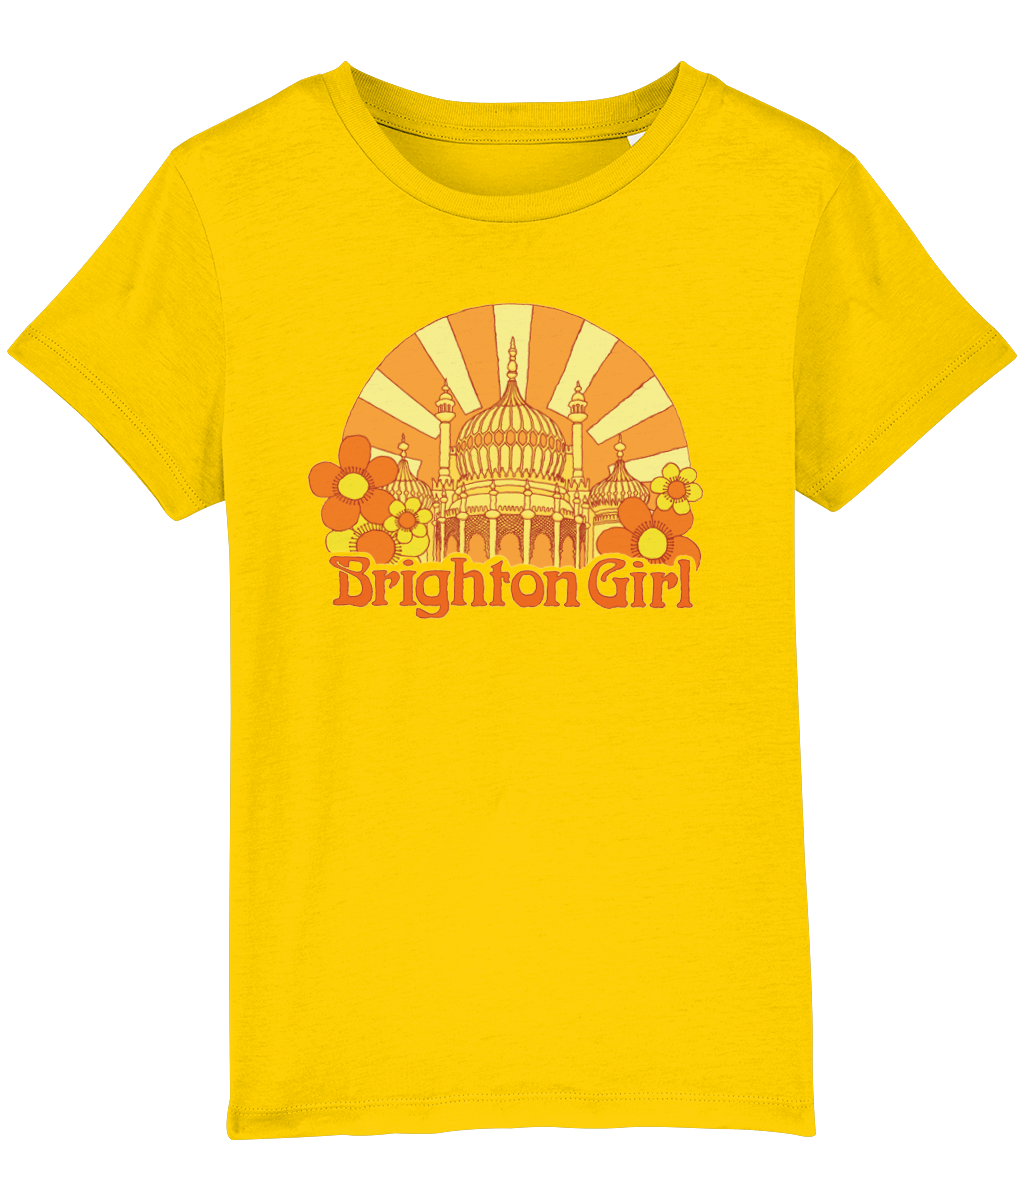 Brighton Girl Teeshirt - Laura Backeberg design (Kids Size)